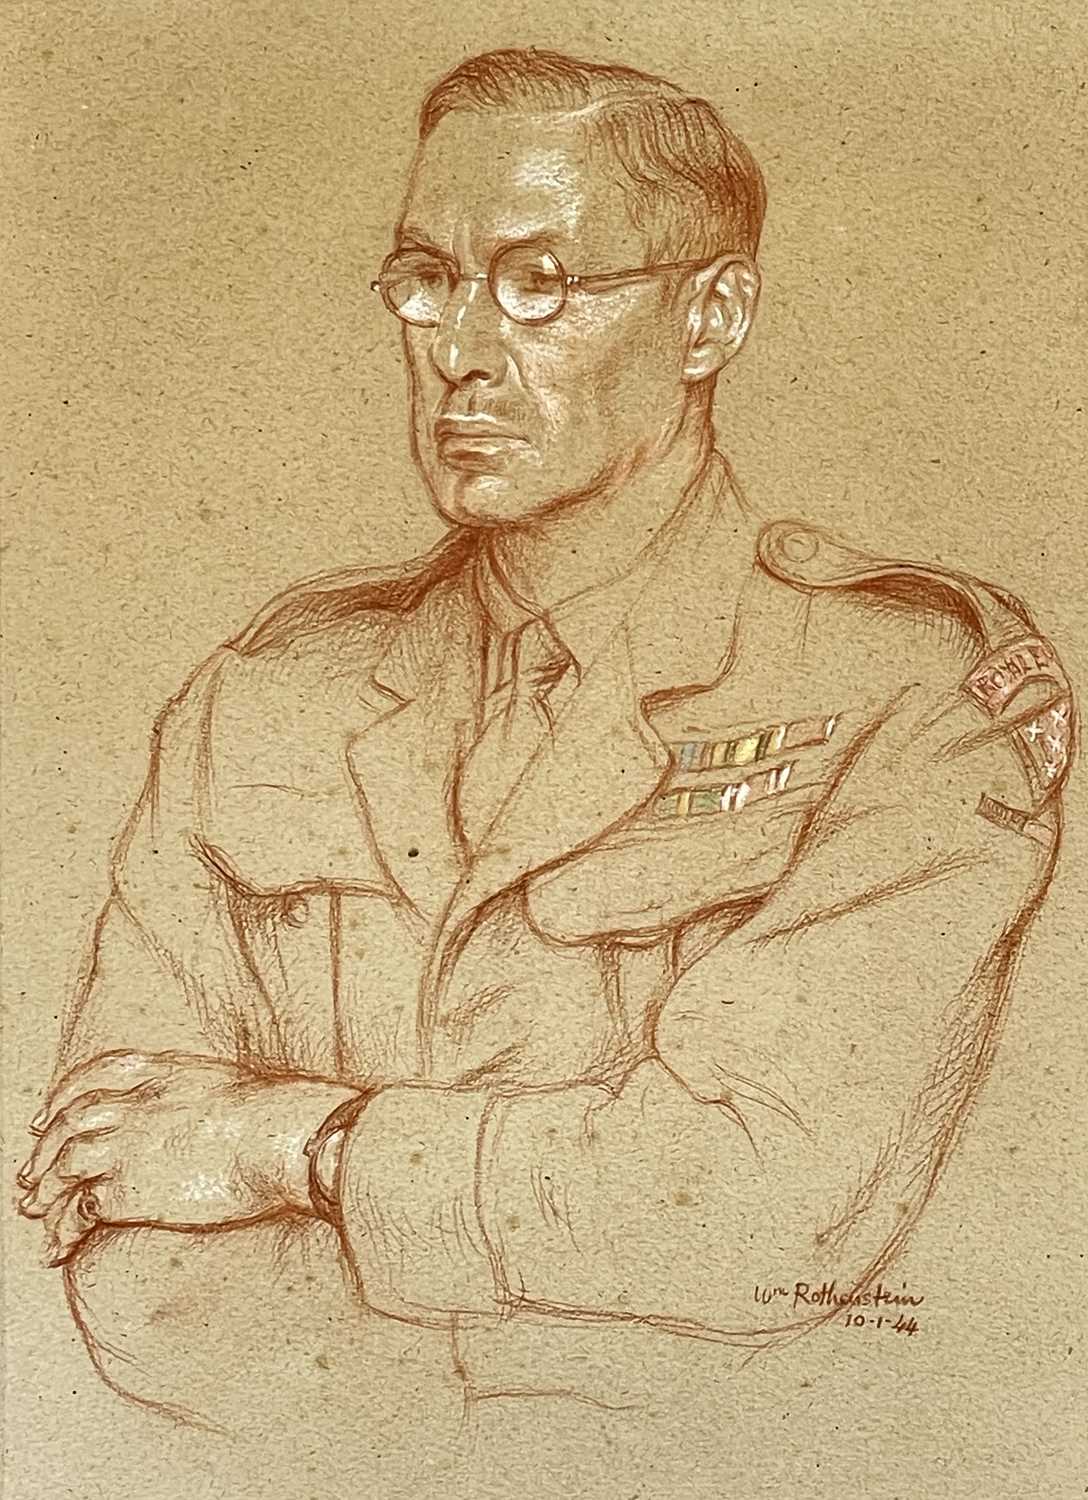 ‡ WILLIAM ROTHENSTEIN (British, 1872-1945) red and white chalk on paper - half portrait of an Army